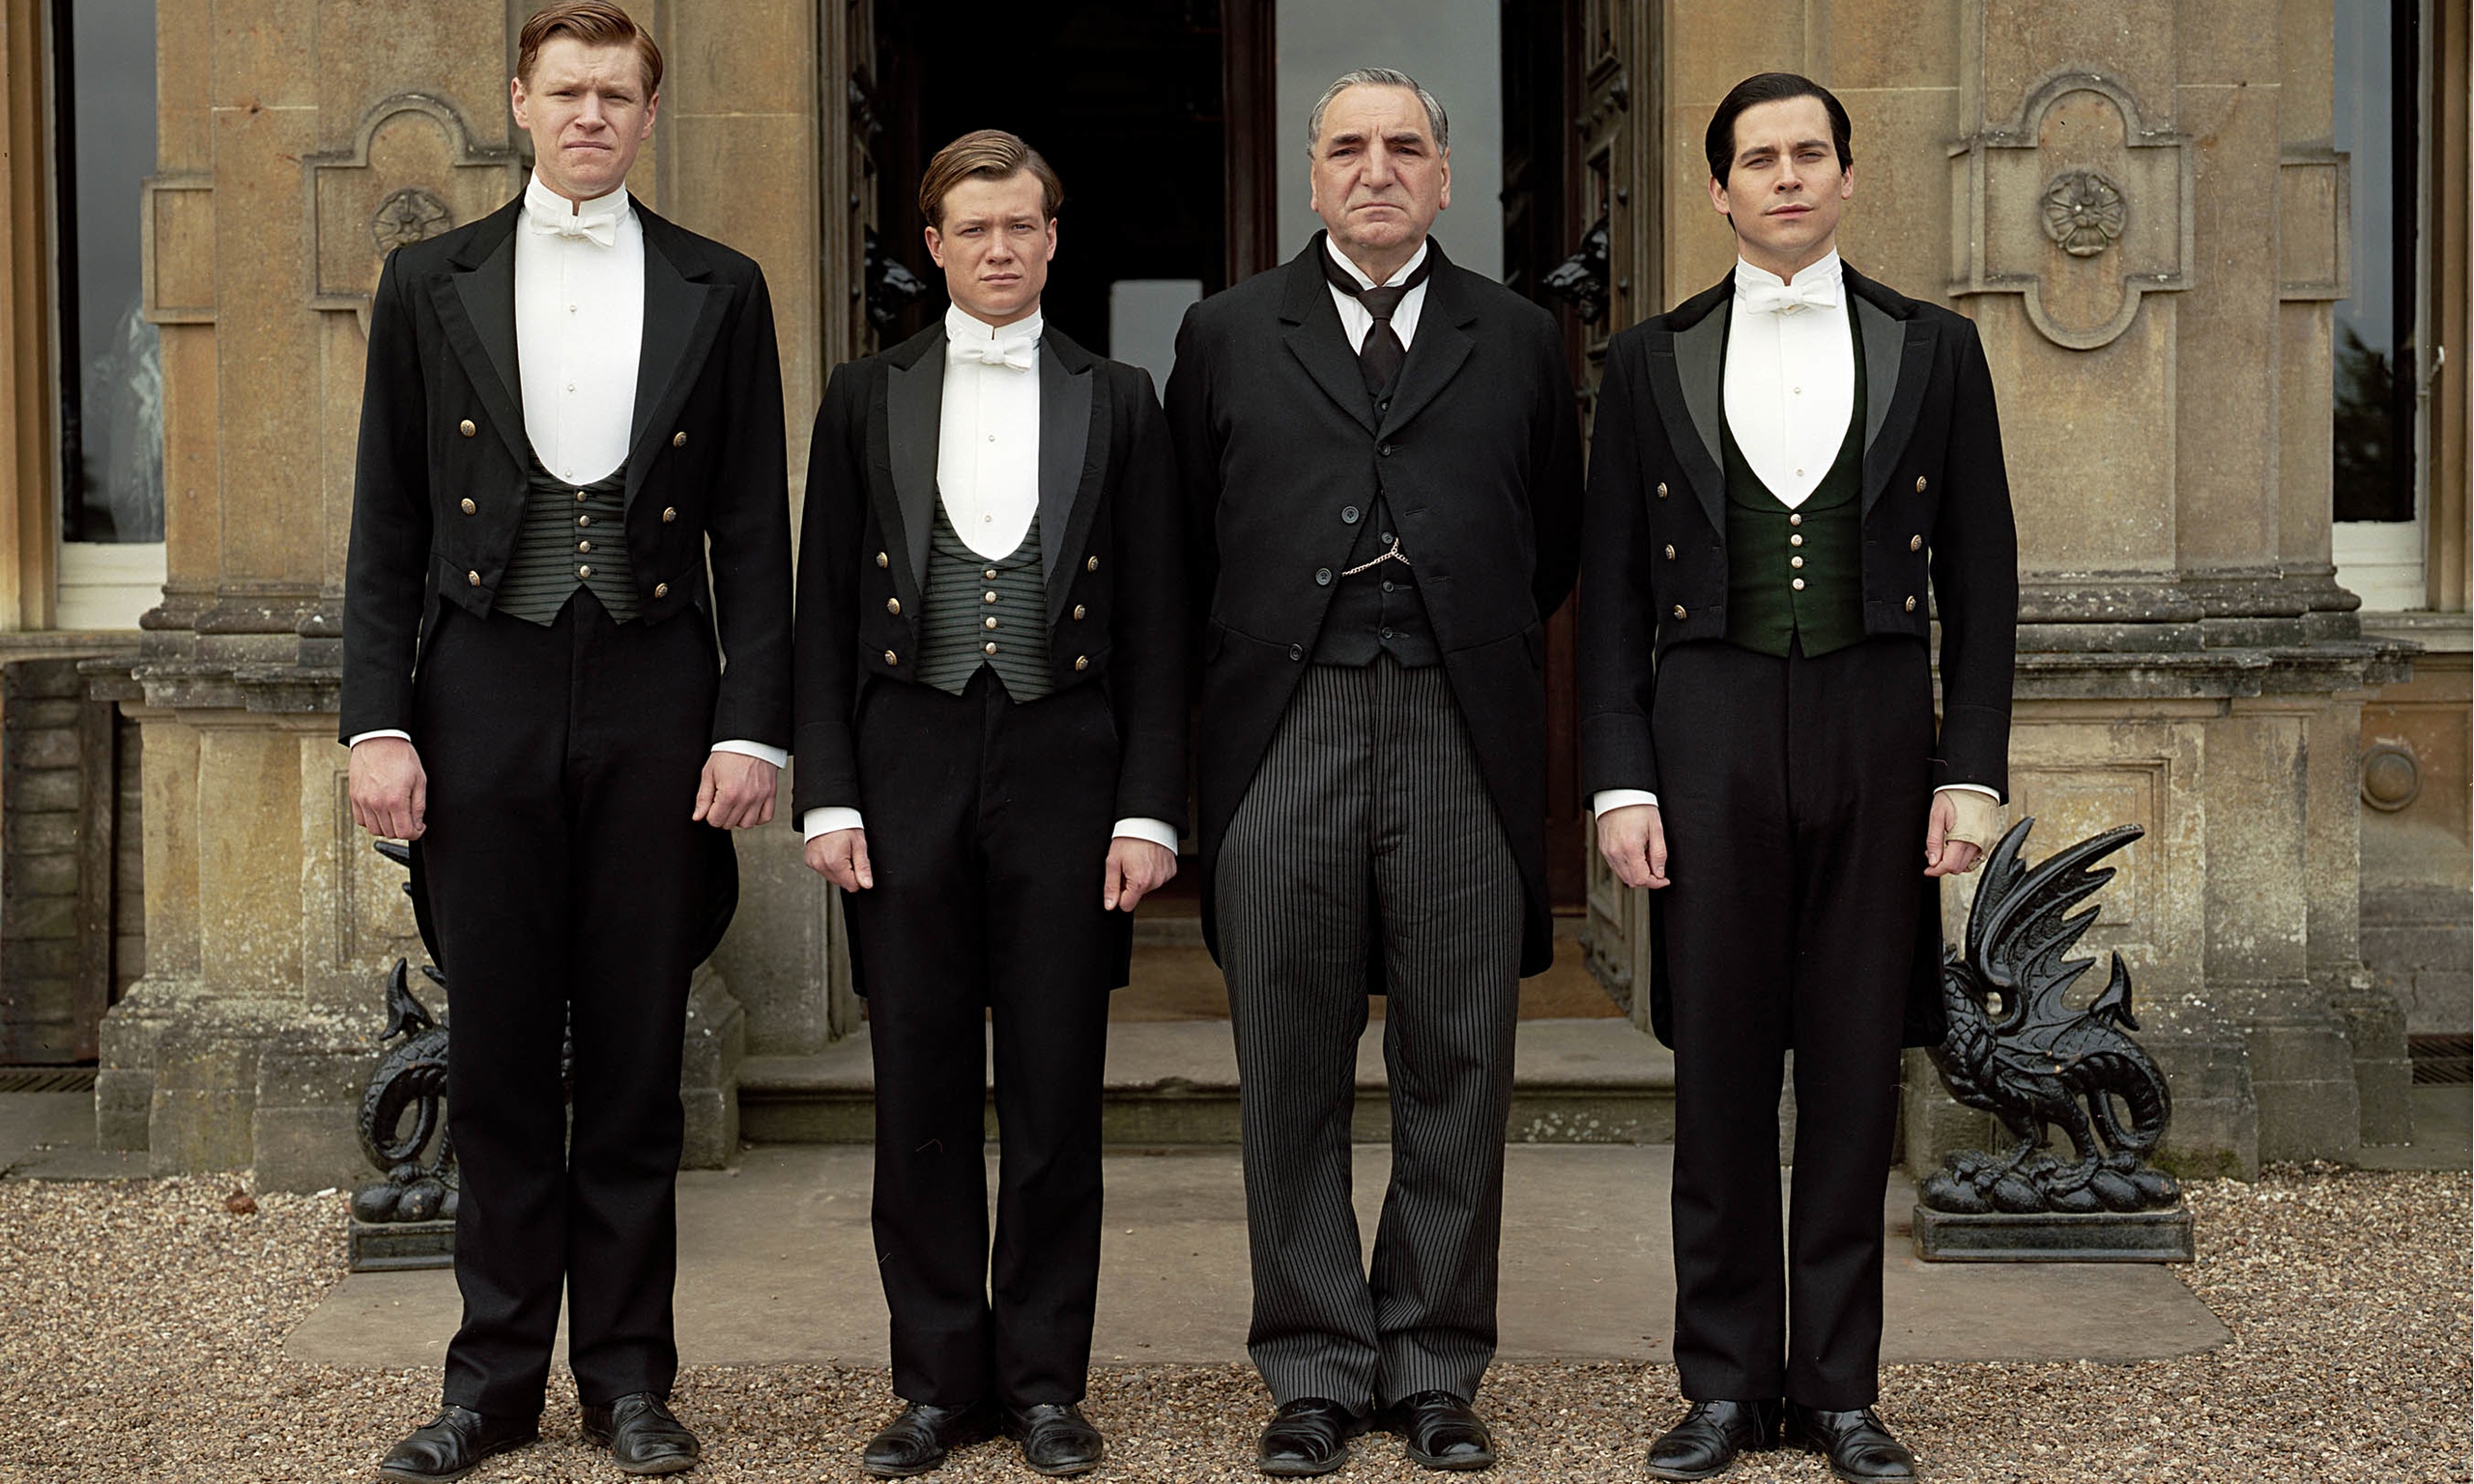 Downton Abbey cast feel the force of Star Wars | Media Monkey | Media | The Guardian2560 x 1536